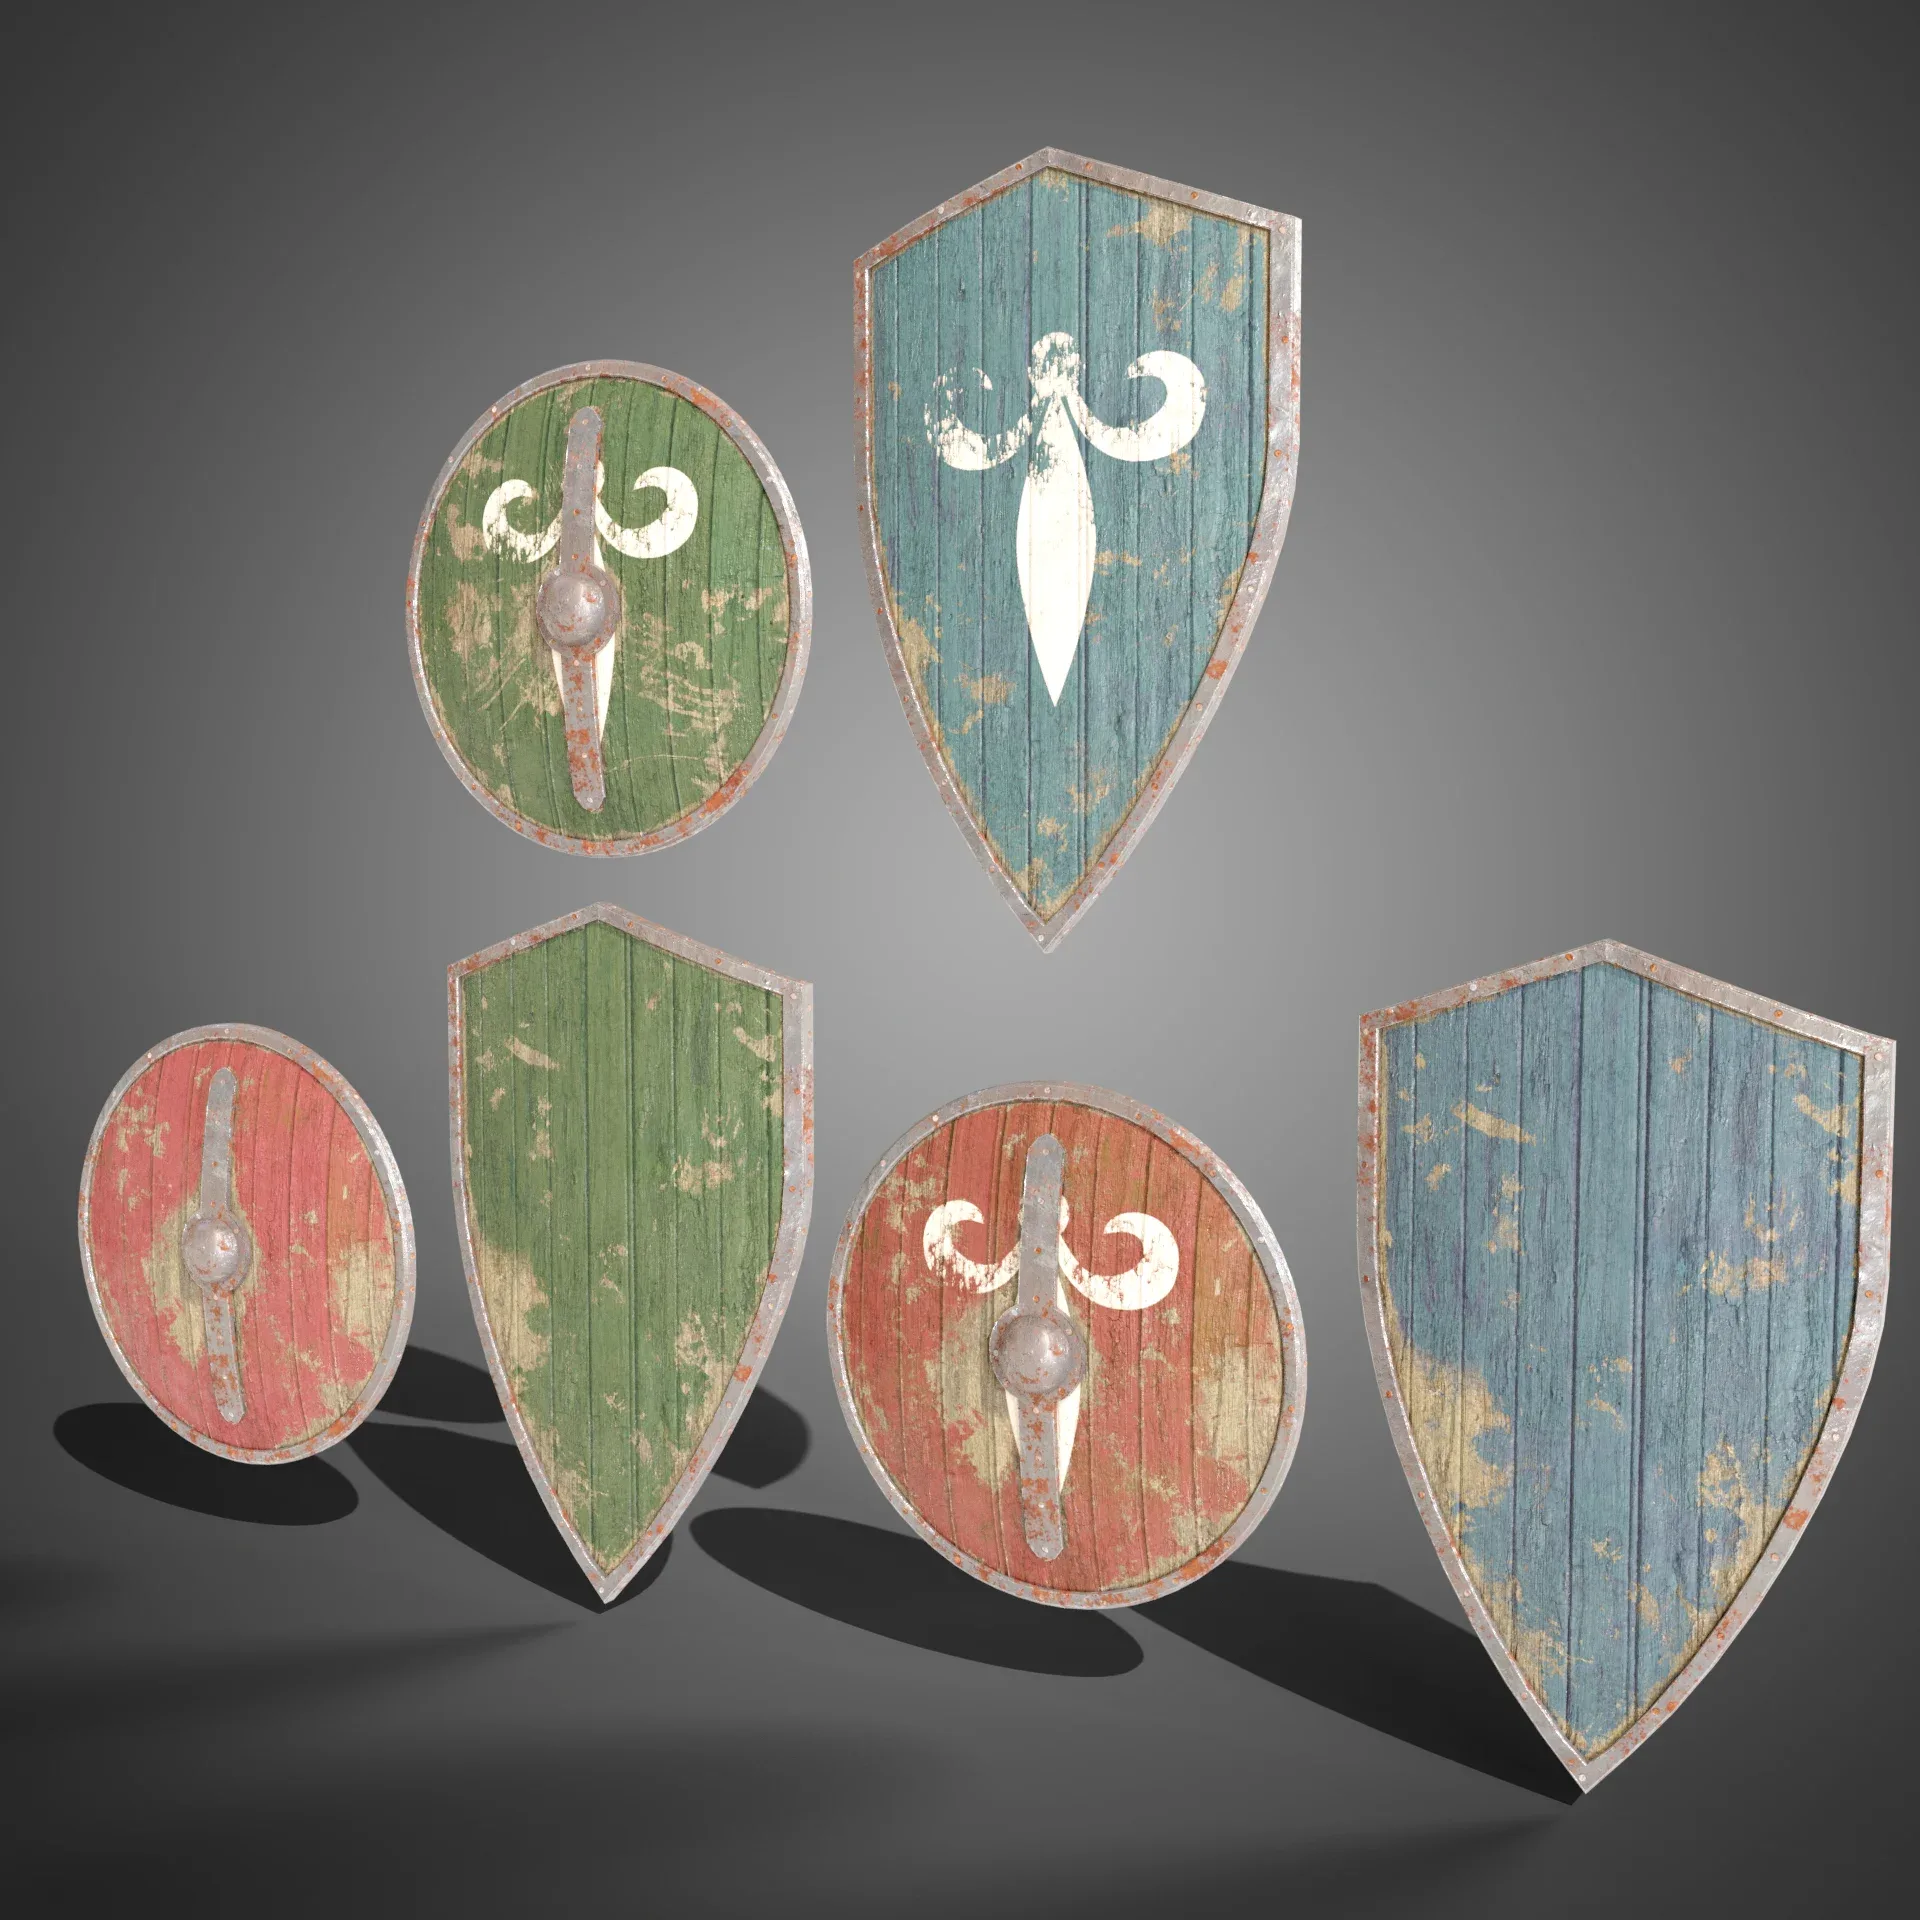 Medieval Shields